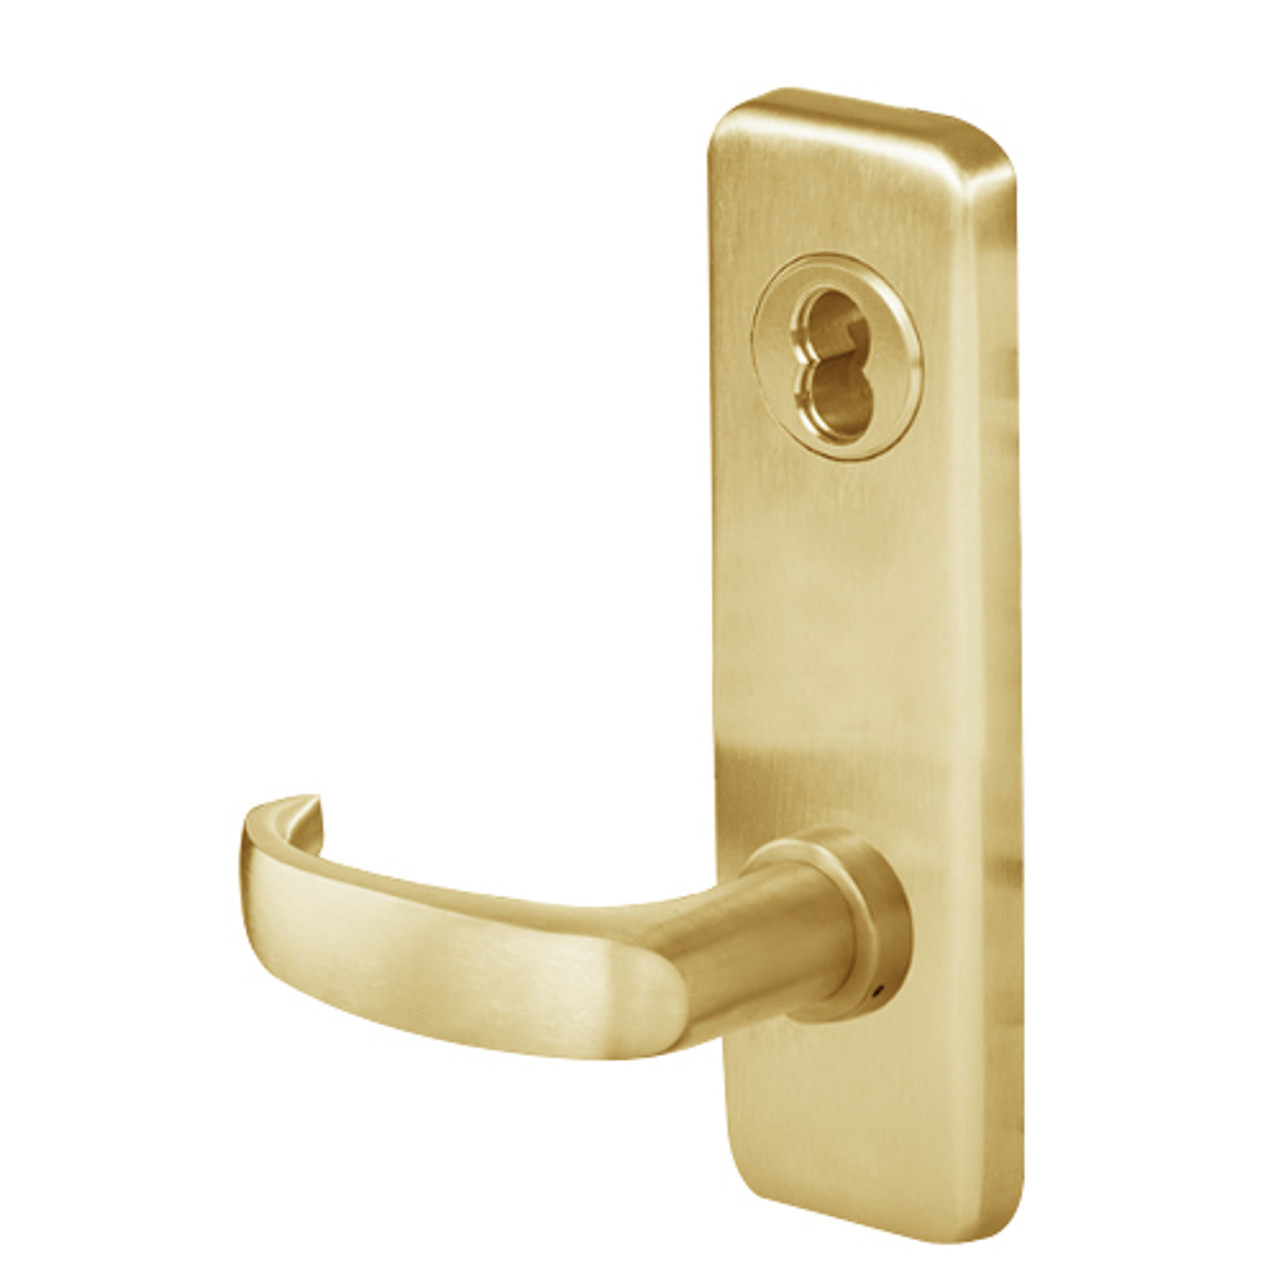 45HW7DEU14J606 Best 40HW series Single Key Latch Fail Secure Electromechanical Mortise Lever Lock with Curved w/ Return Style in Satin Brass